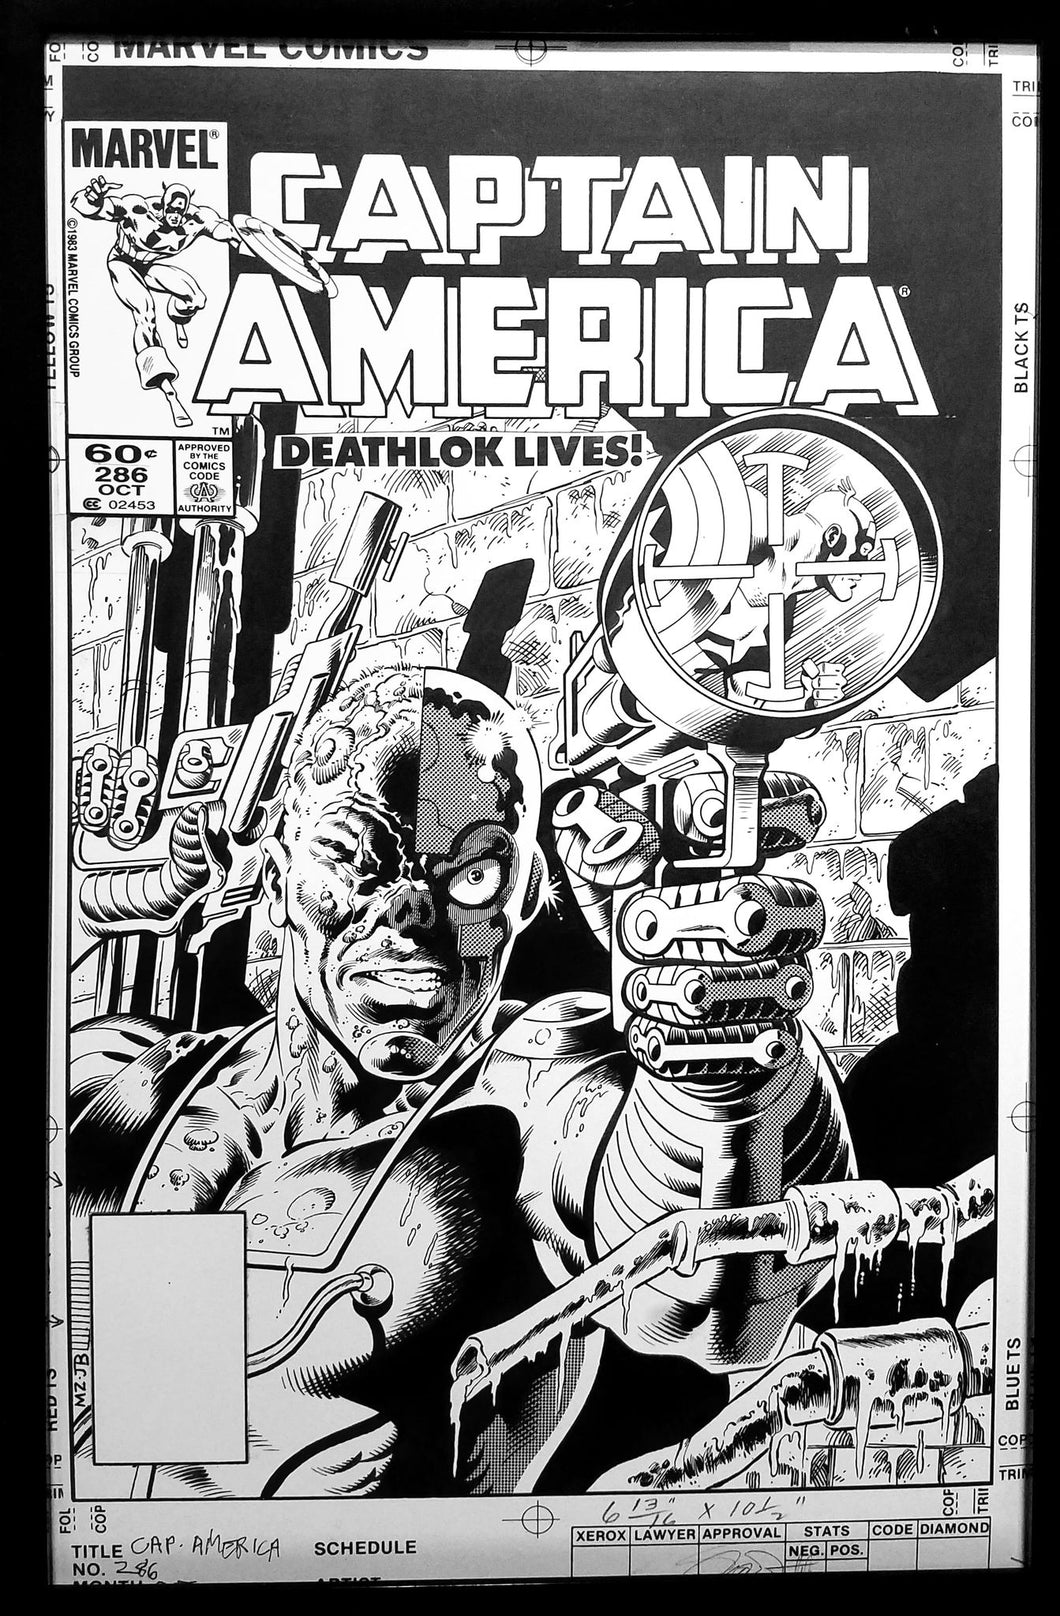 Captain America #286 Deathlok by Mike Zeck 11x17 FRAMED Original Art Poster Marvel Comics